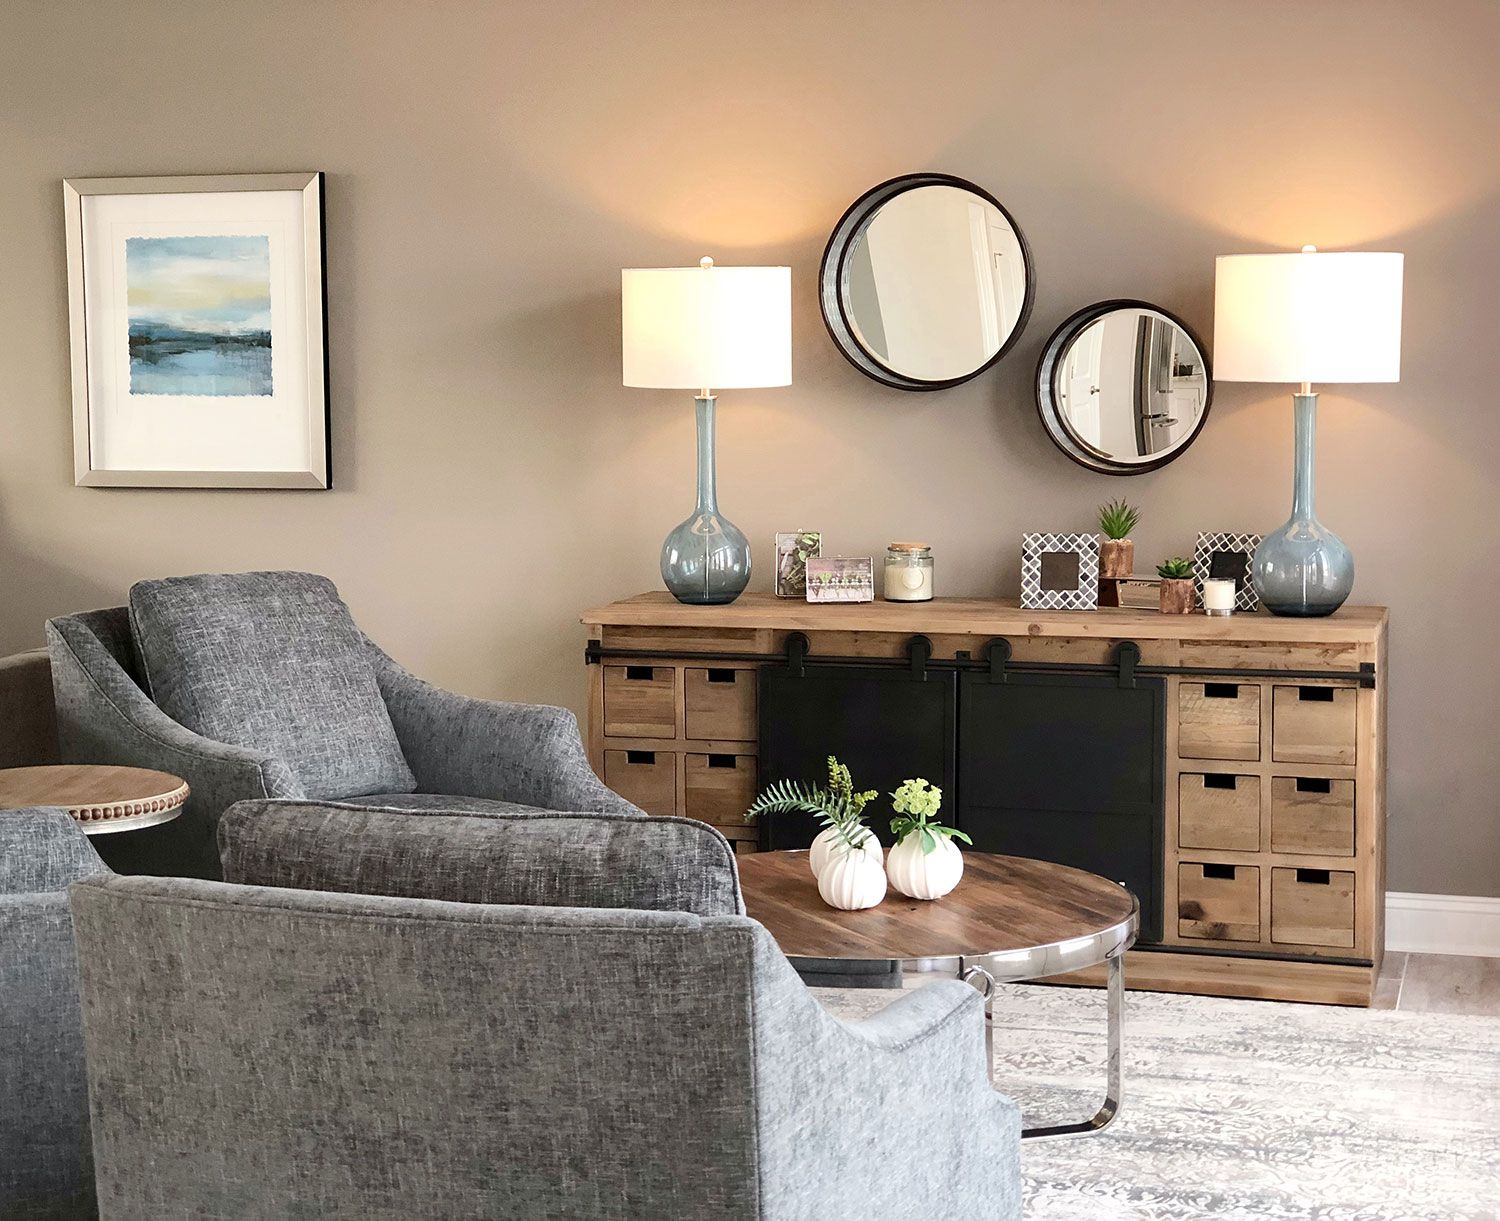 Lavallette New Jersey - Living Room Interior Design 2